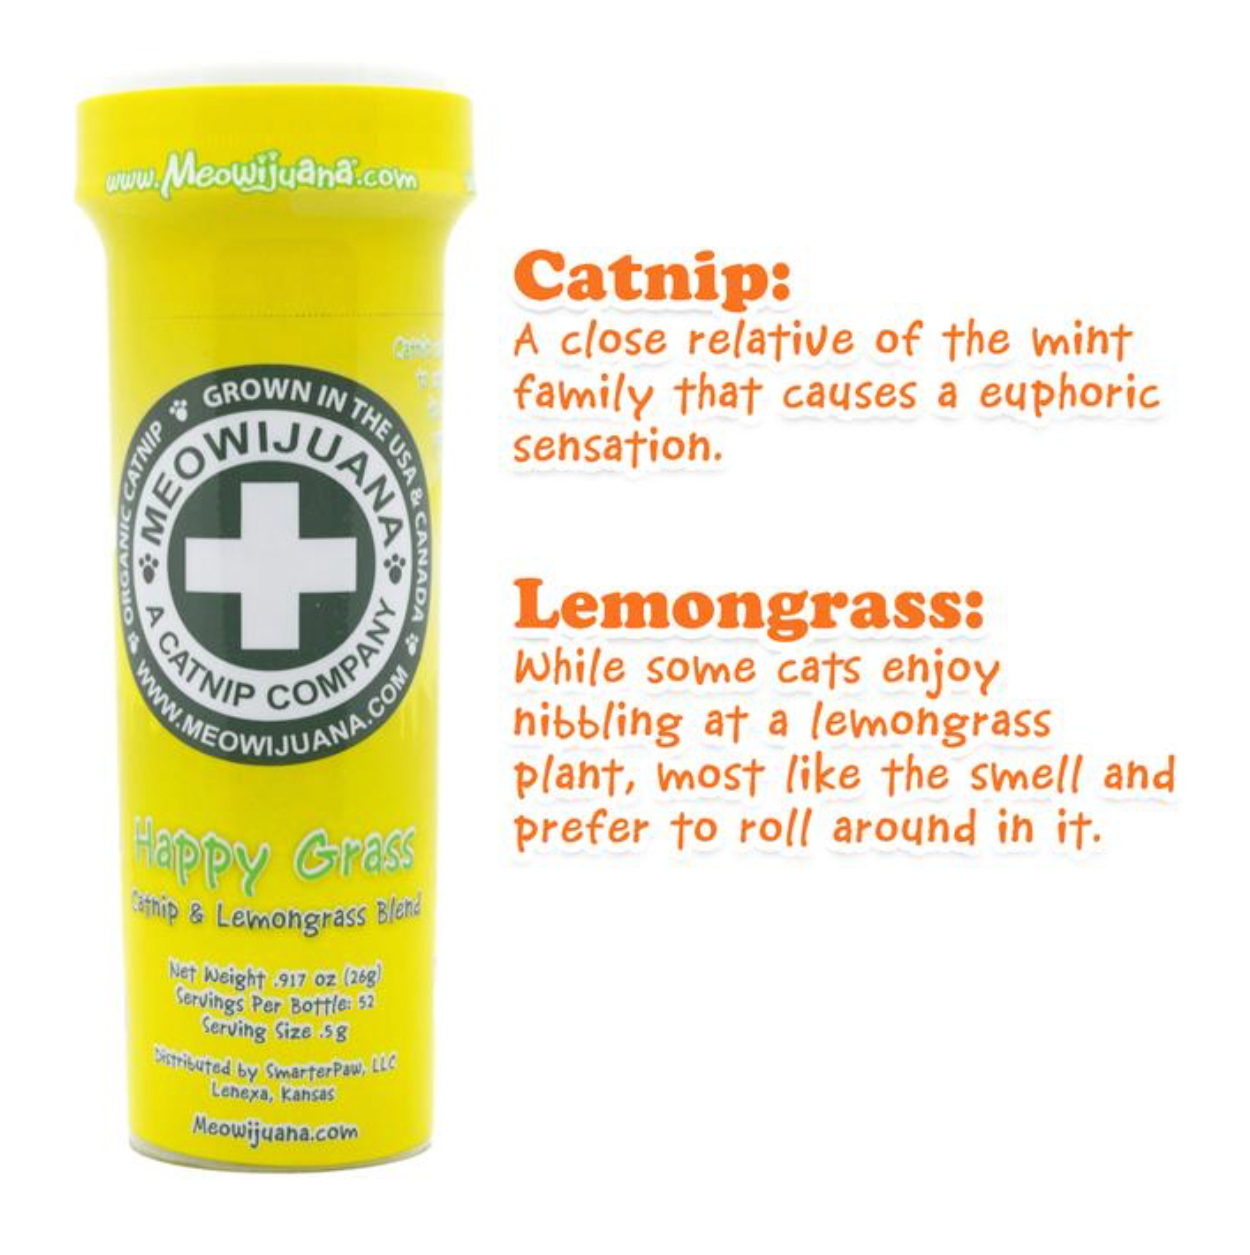 Meowijuana Happy Grass - Catnip and Lemongrass Blend 26g